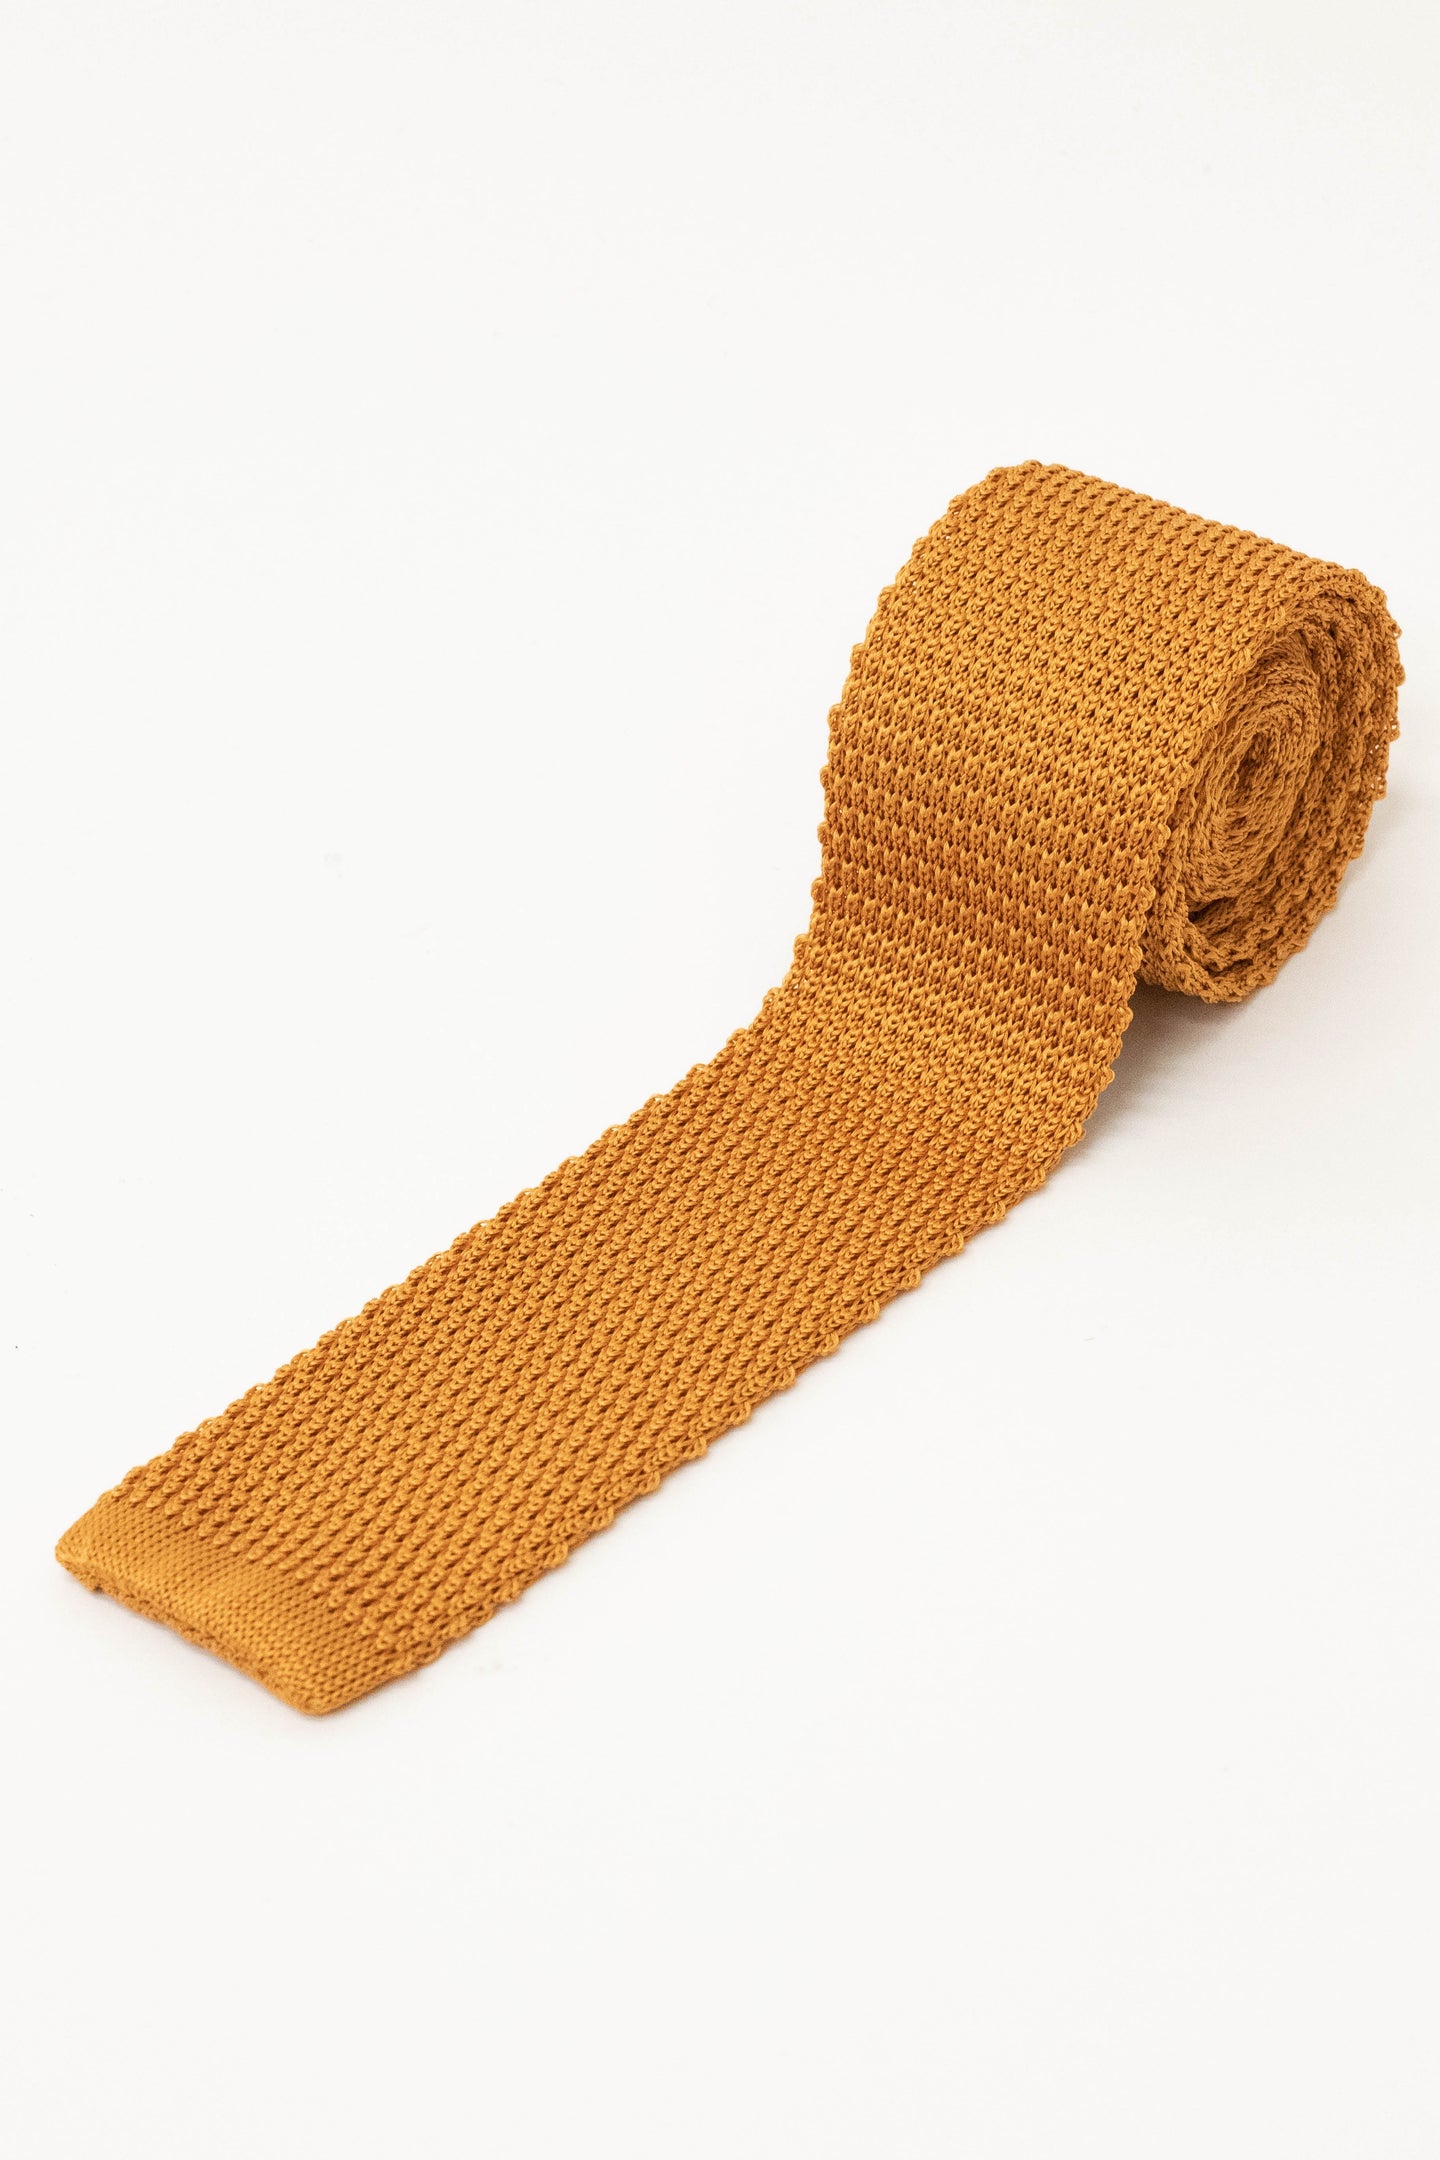 Knightsbridge Neckwear Plain Vintage Gold Silk Knitted Tie